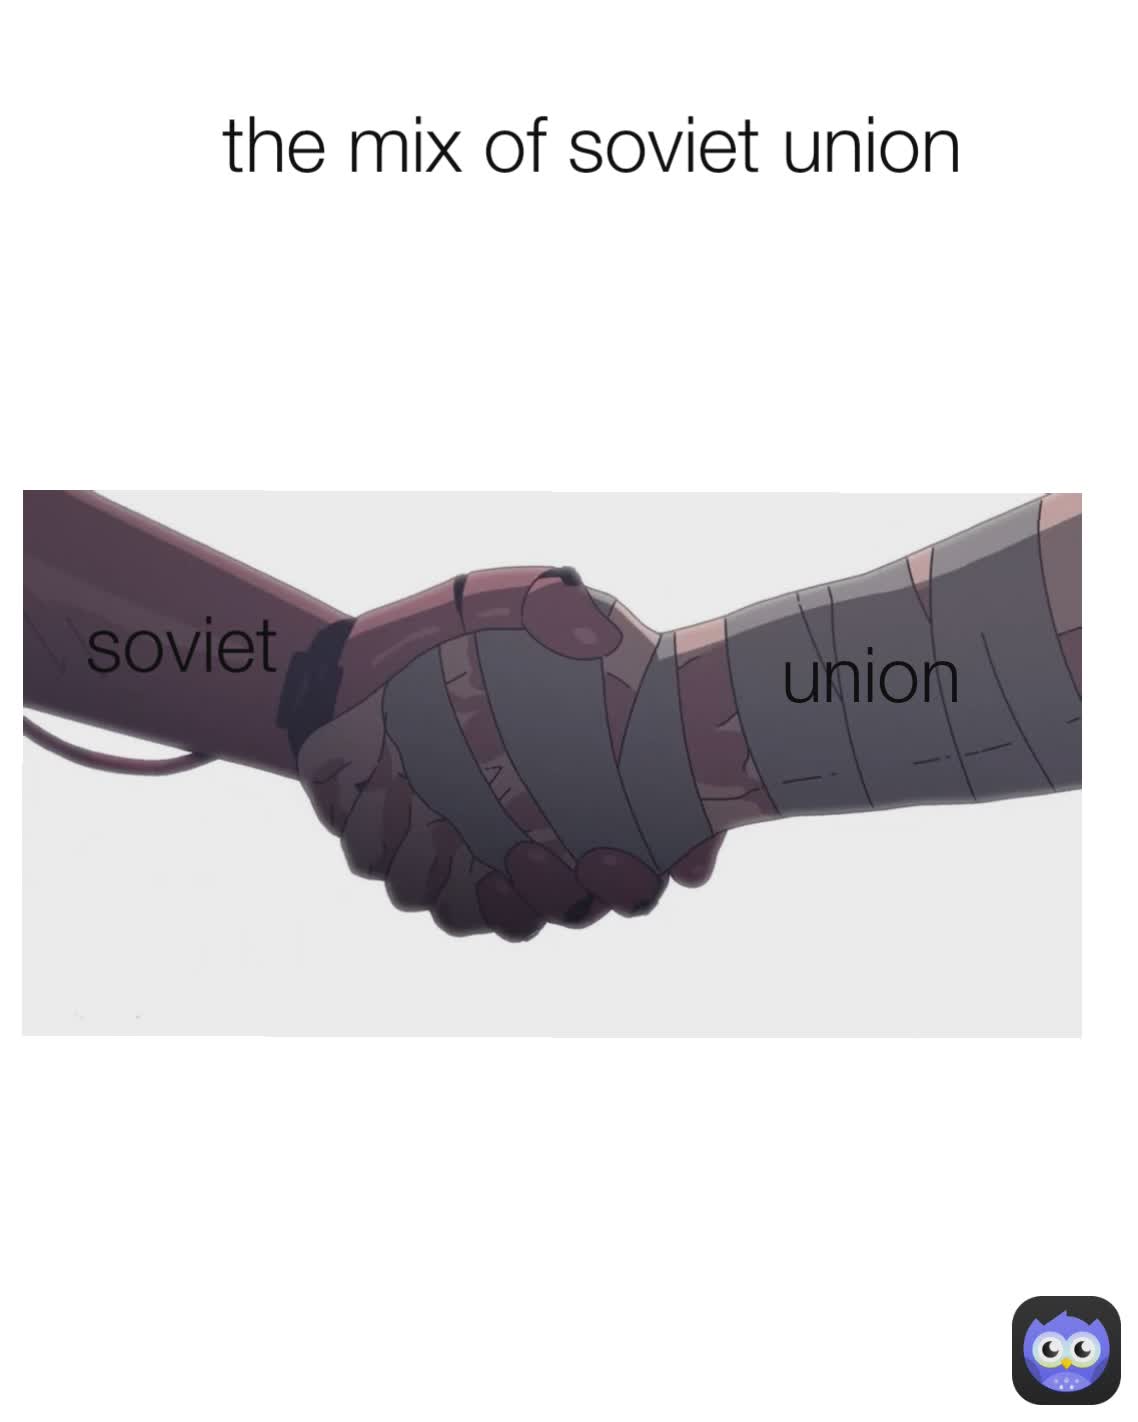 soviet the mix of soviet union union